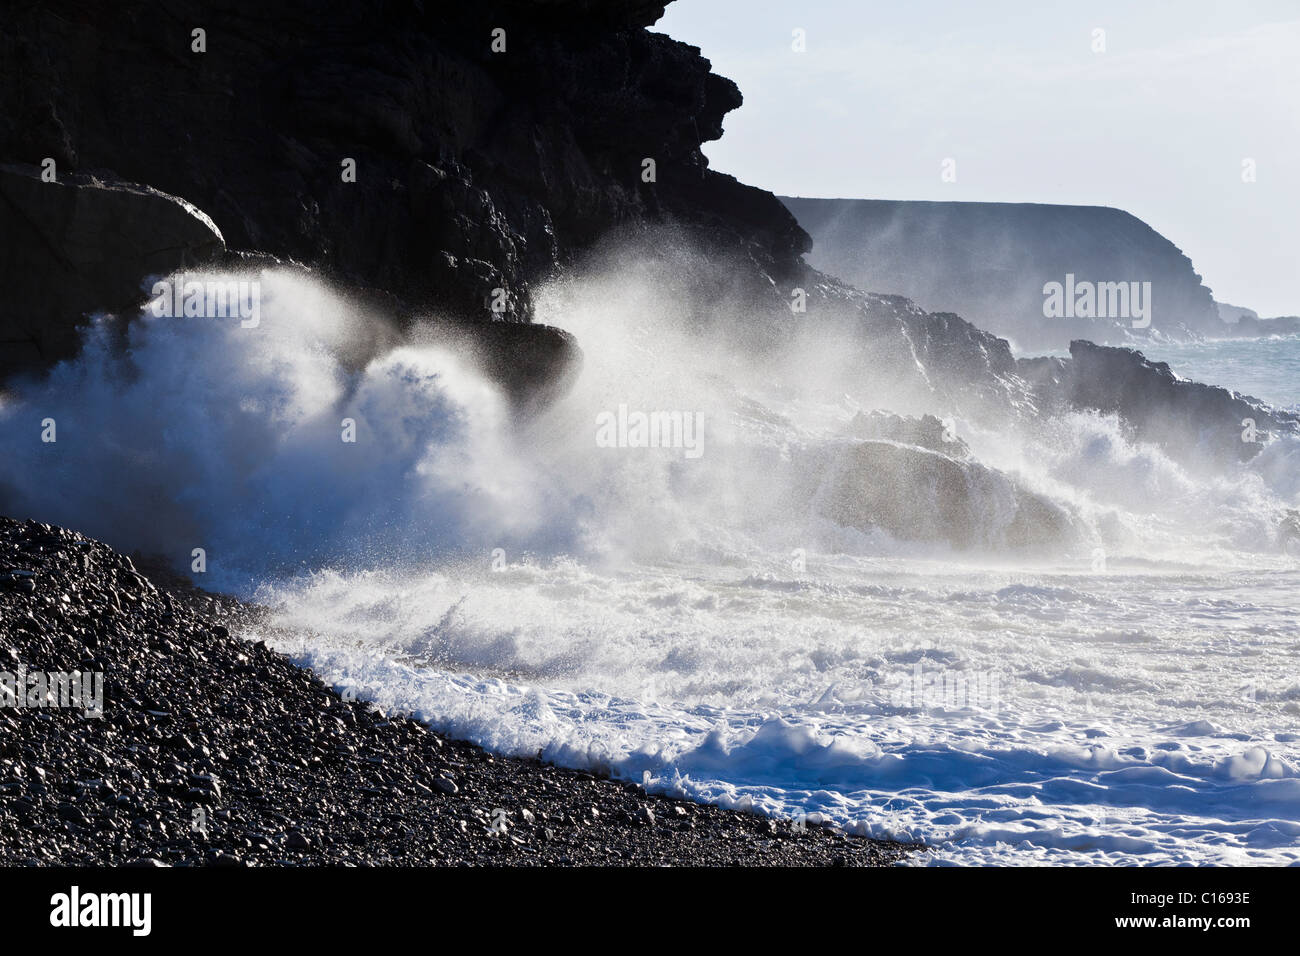 Heavy Atlantic seas with large waves crashing onto rocks at Ajuy on the Canary Island of Fuerteventura Stock Photo